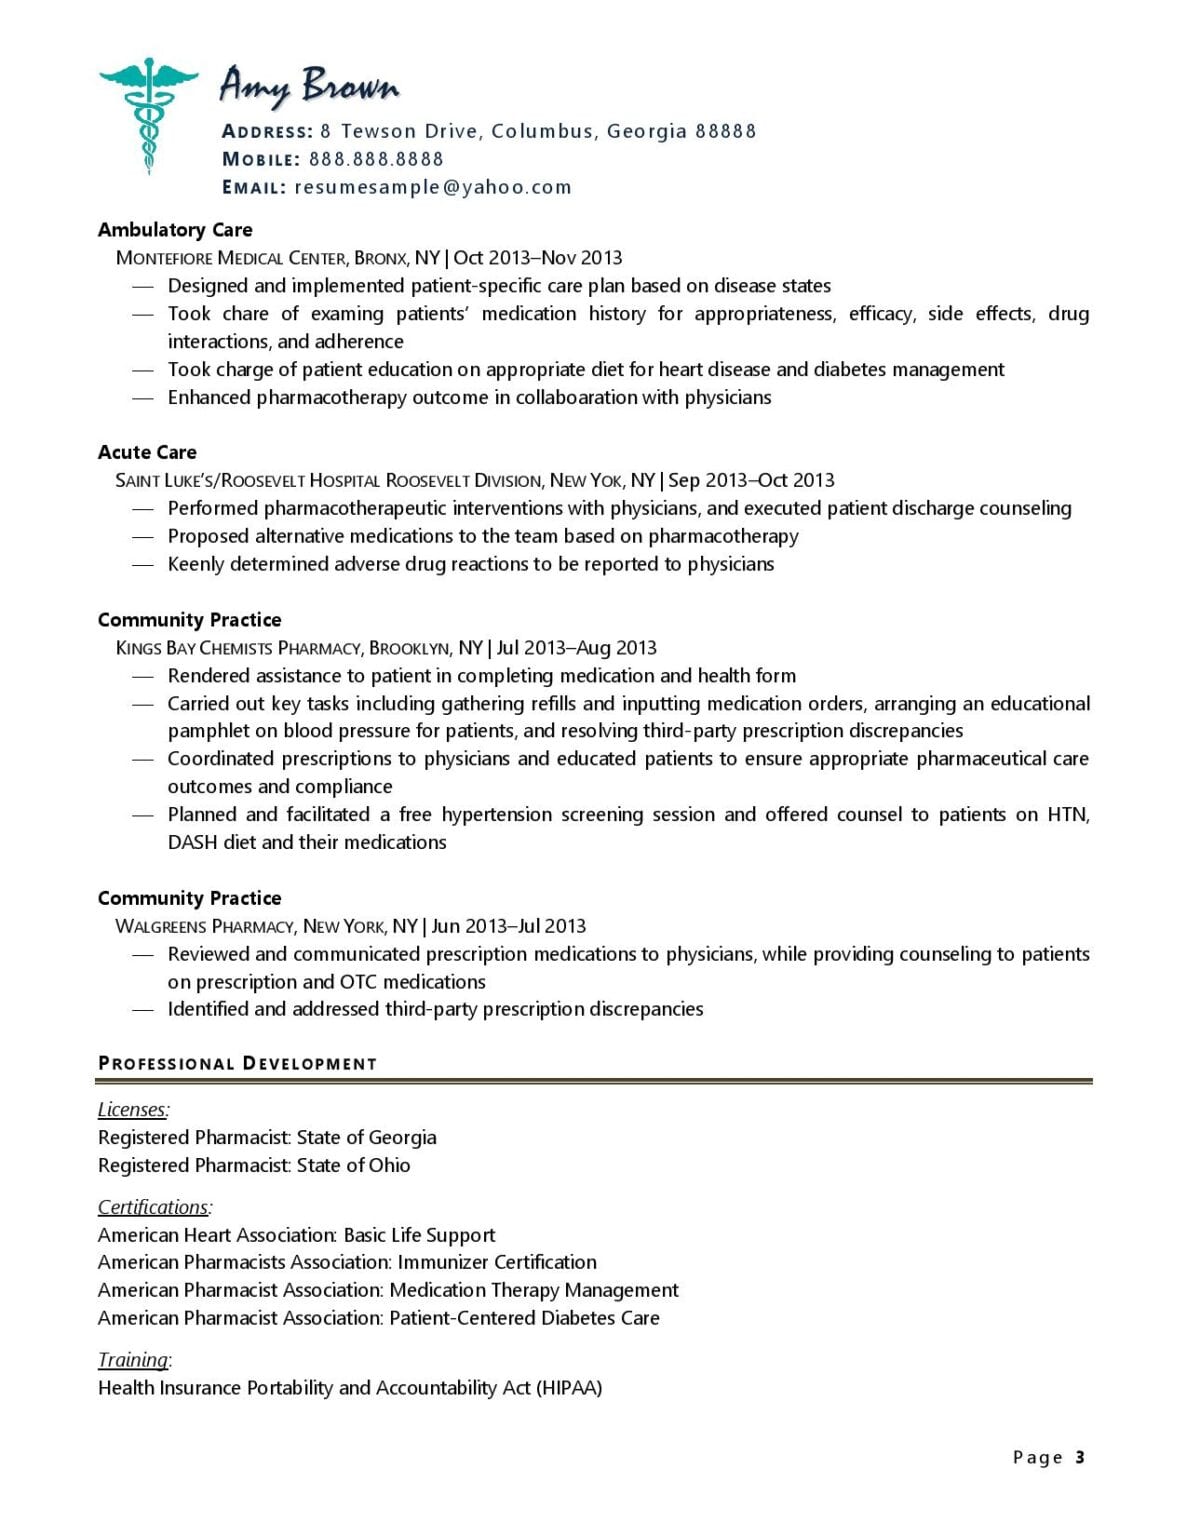 resume format for pharmacist in india